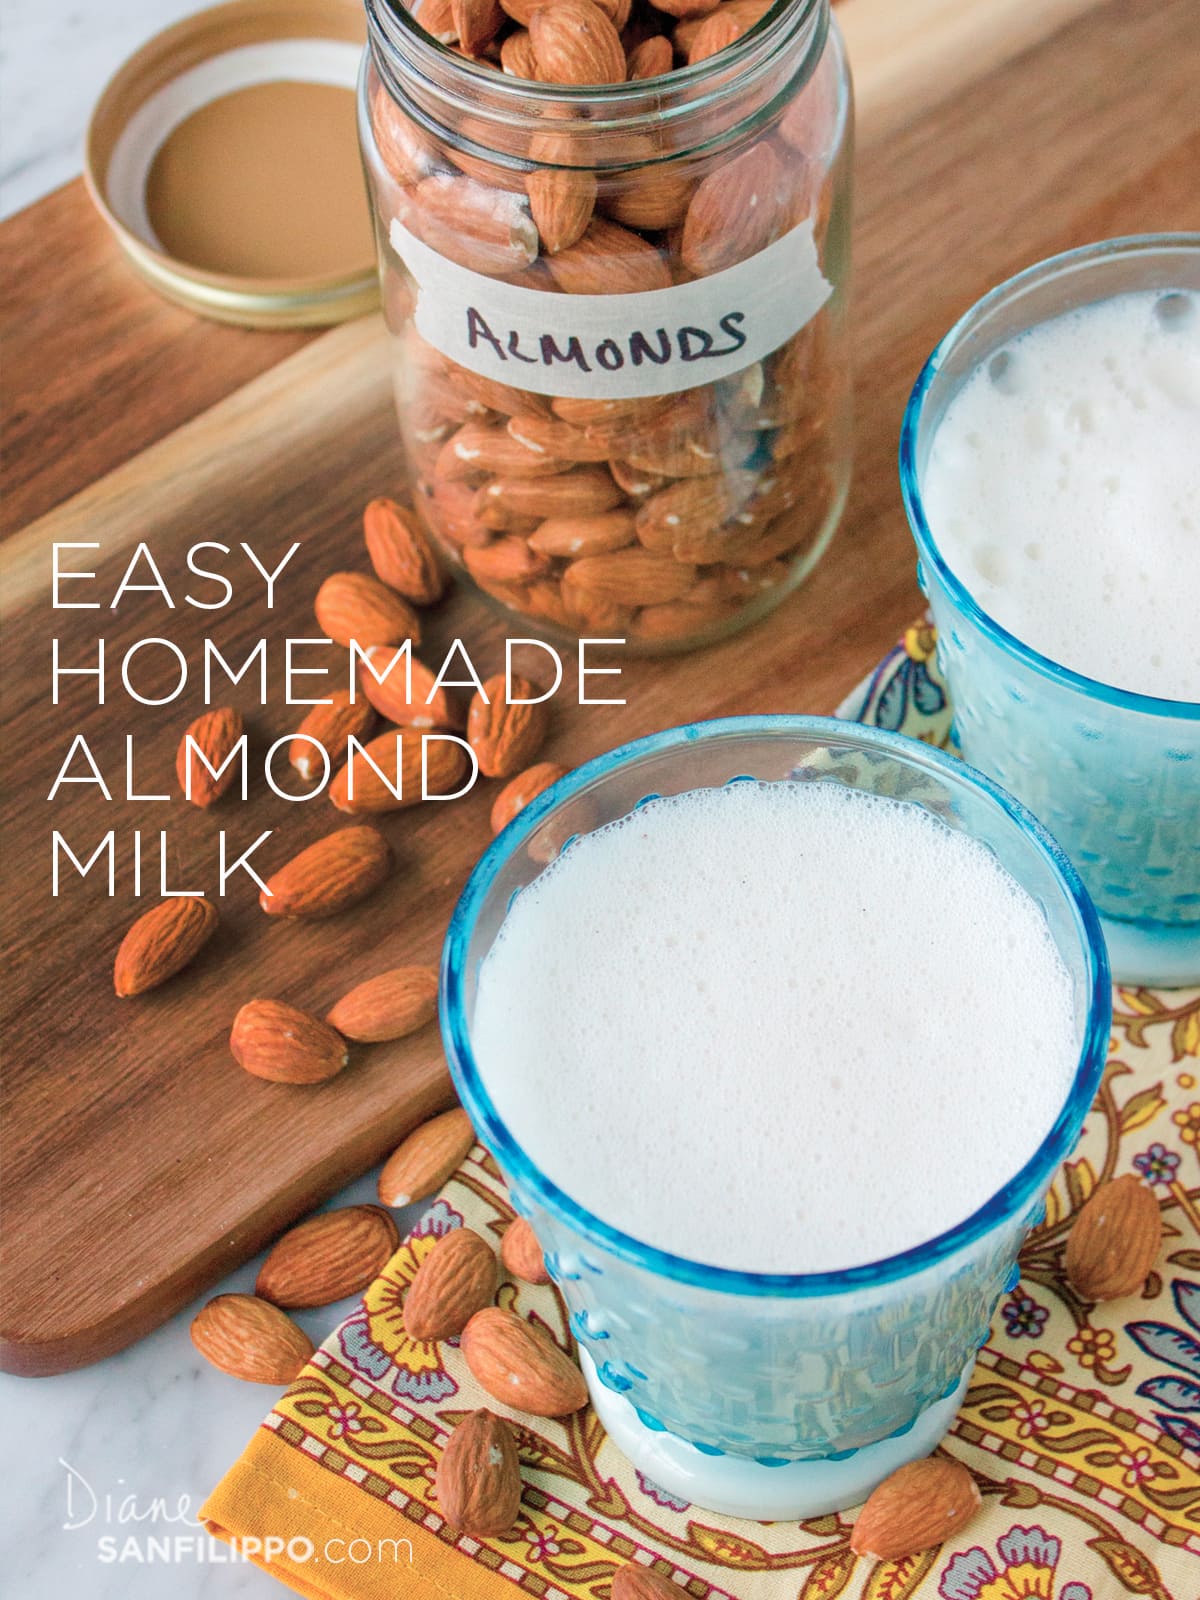 Homemade Almond Milk & Almond Meal | Diane Sanfilippo (recipe from The 21-Day Sugar Detox)